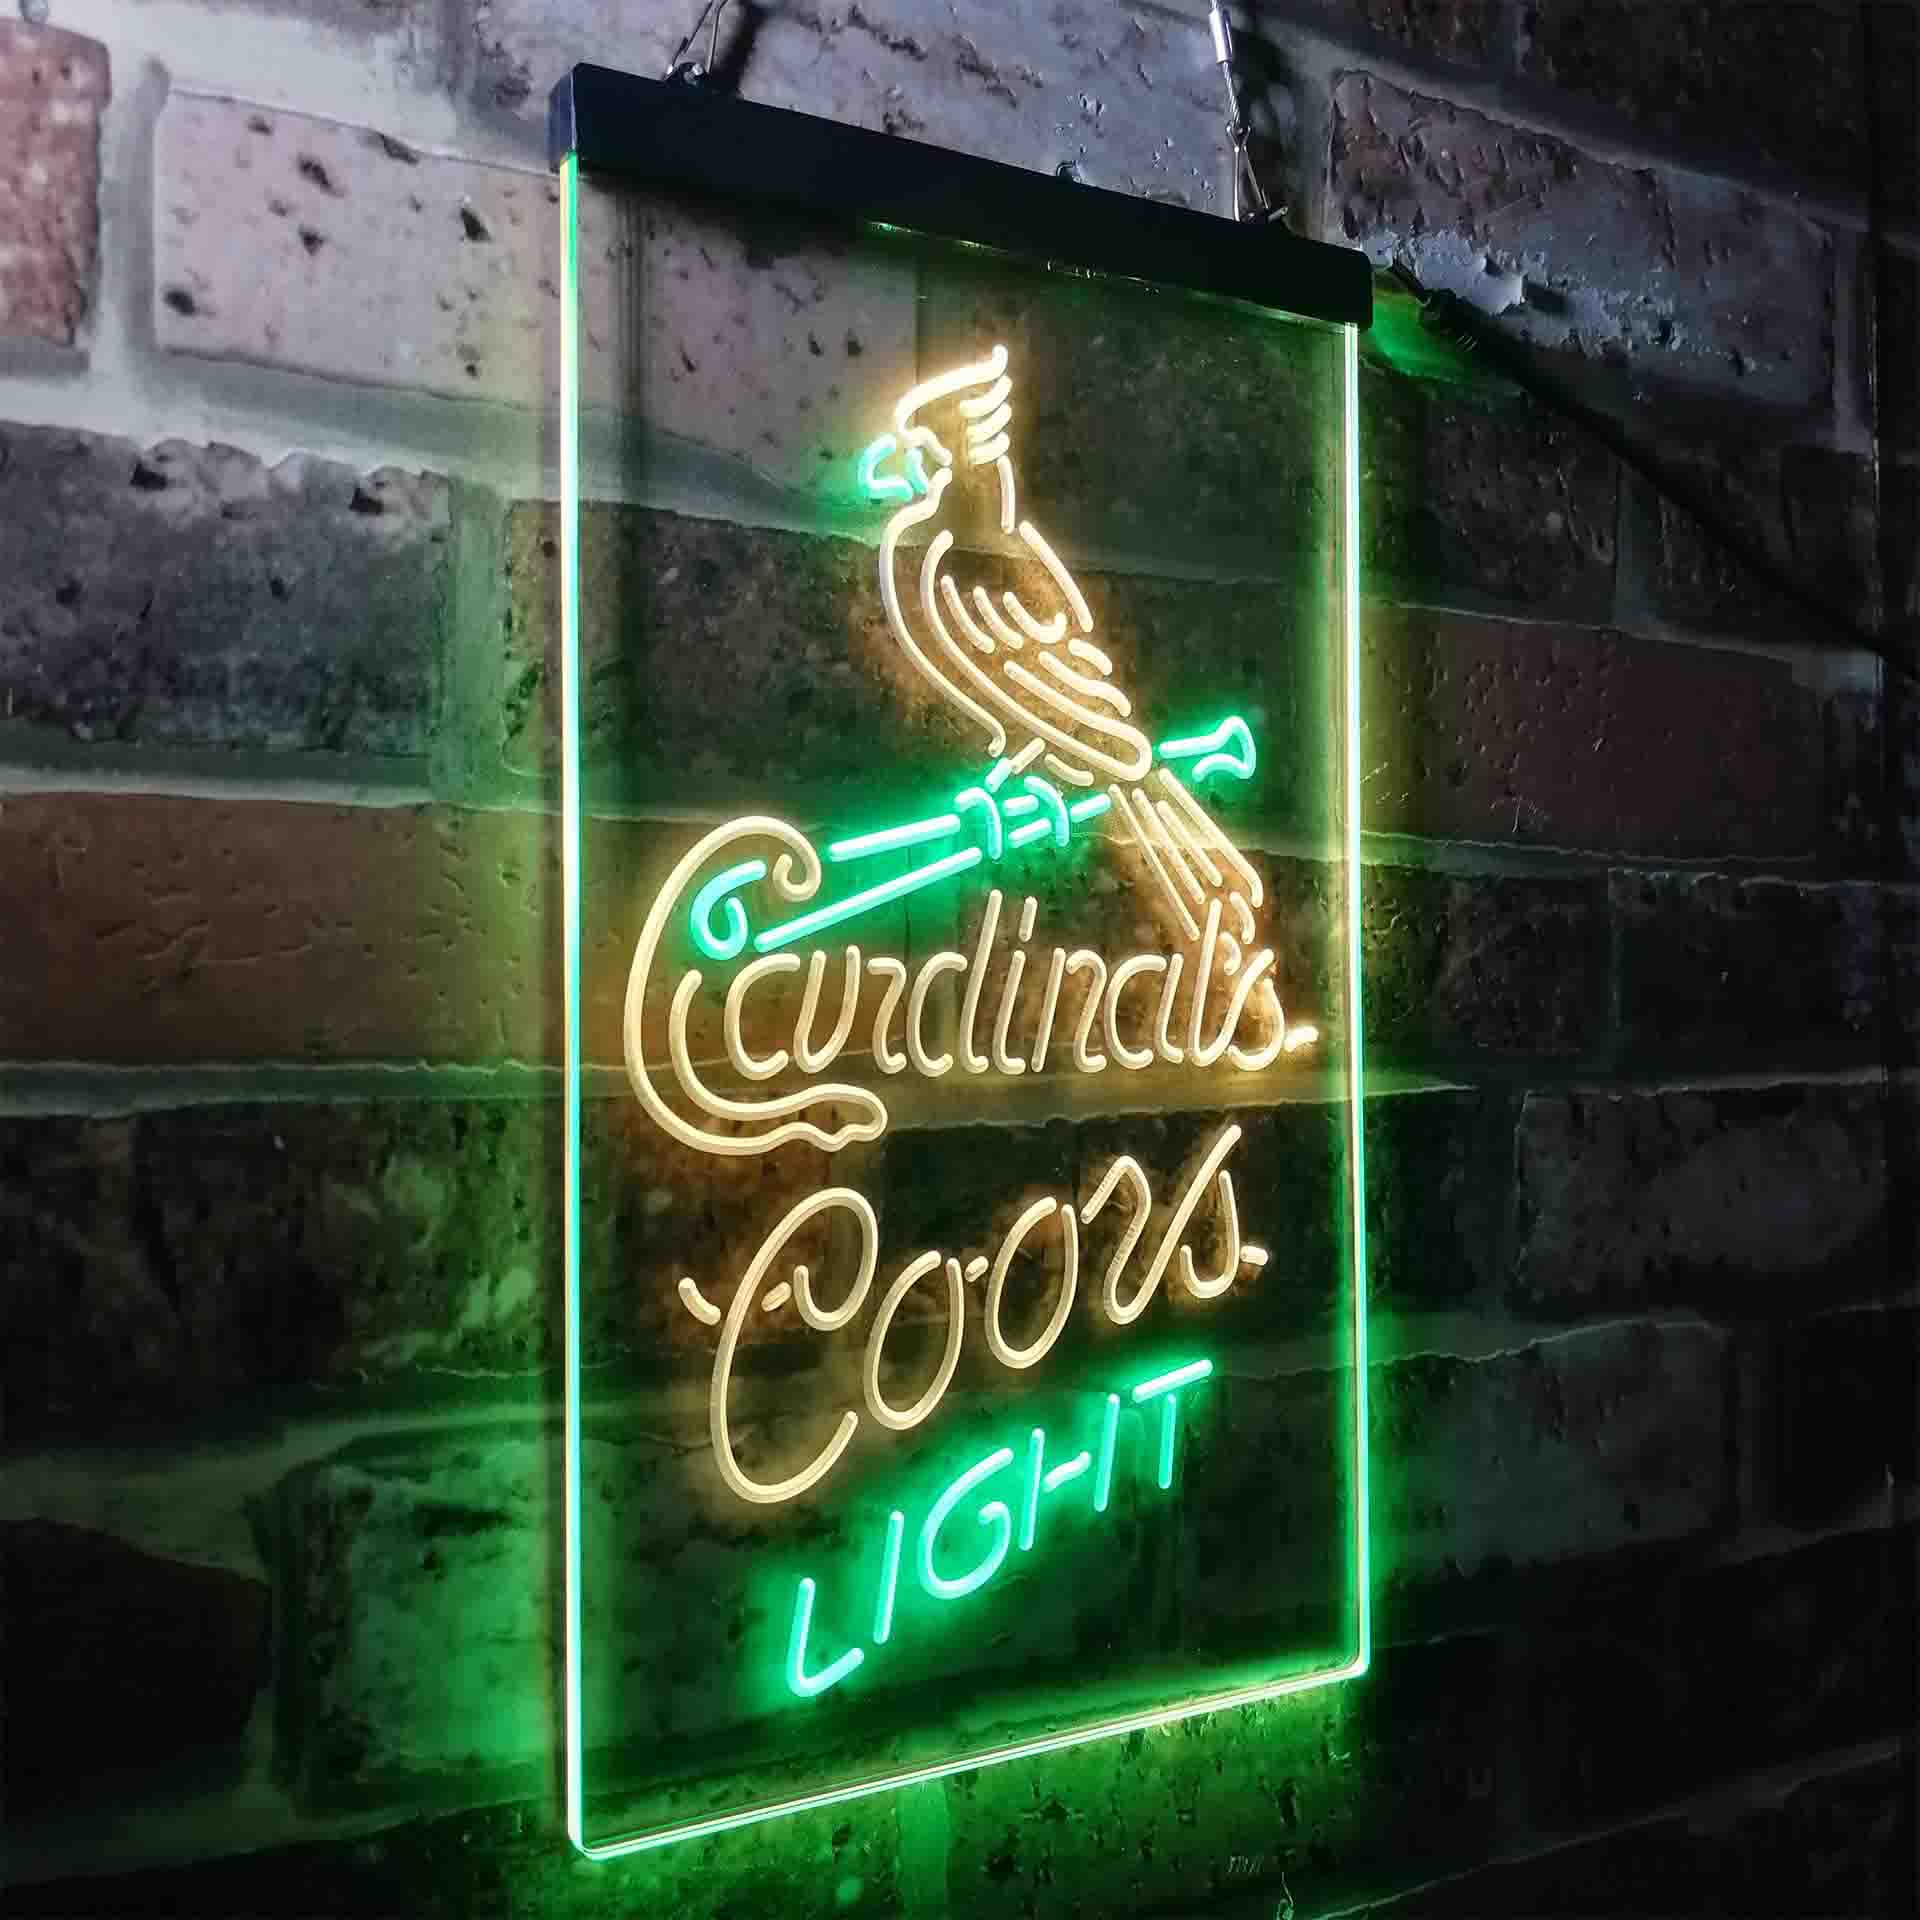 St Louis Cardinals Coors Light LED Neon Sign